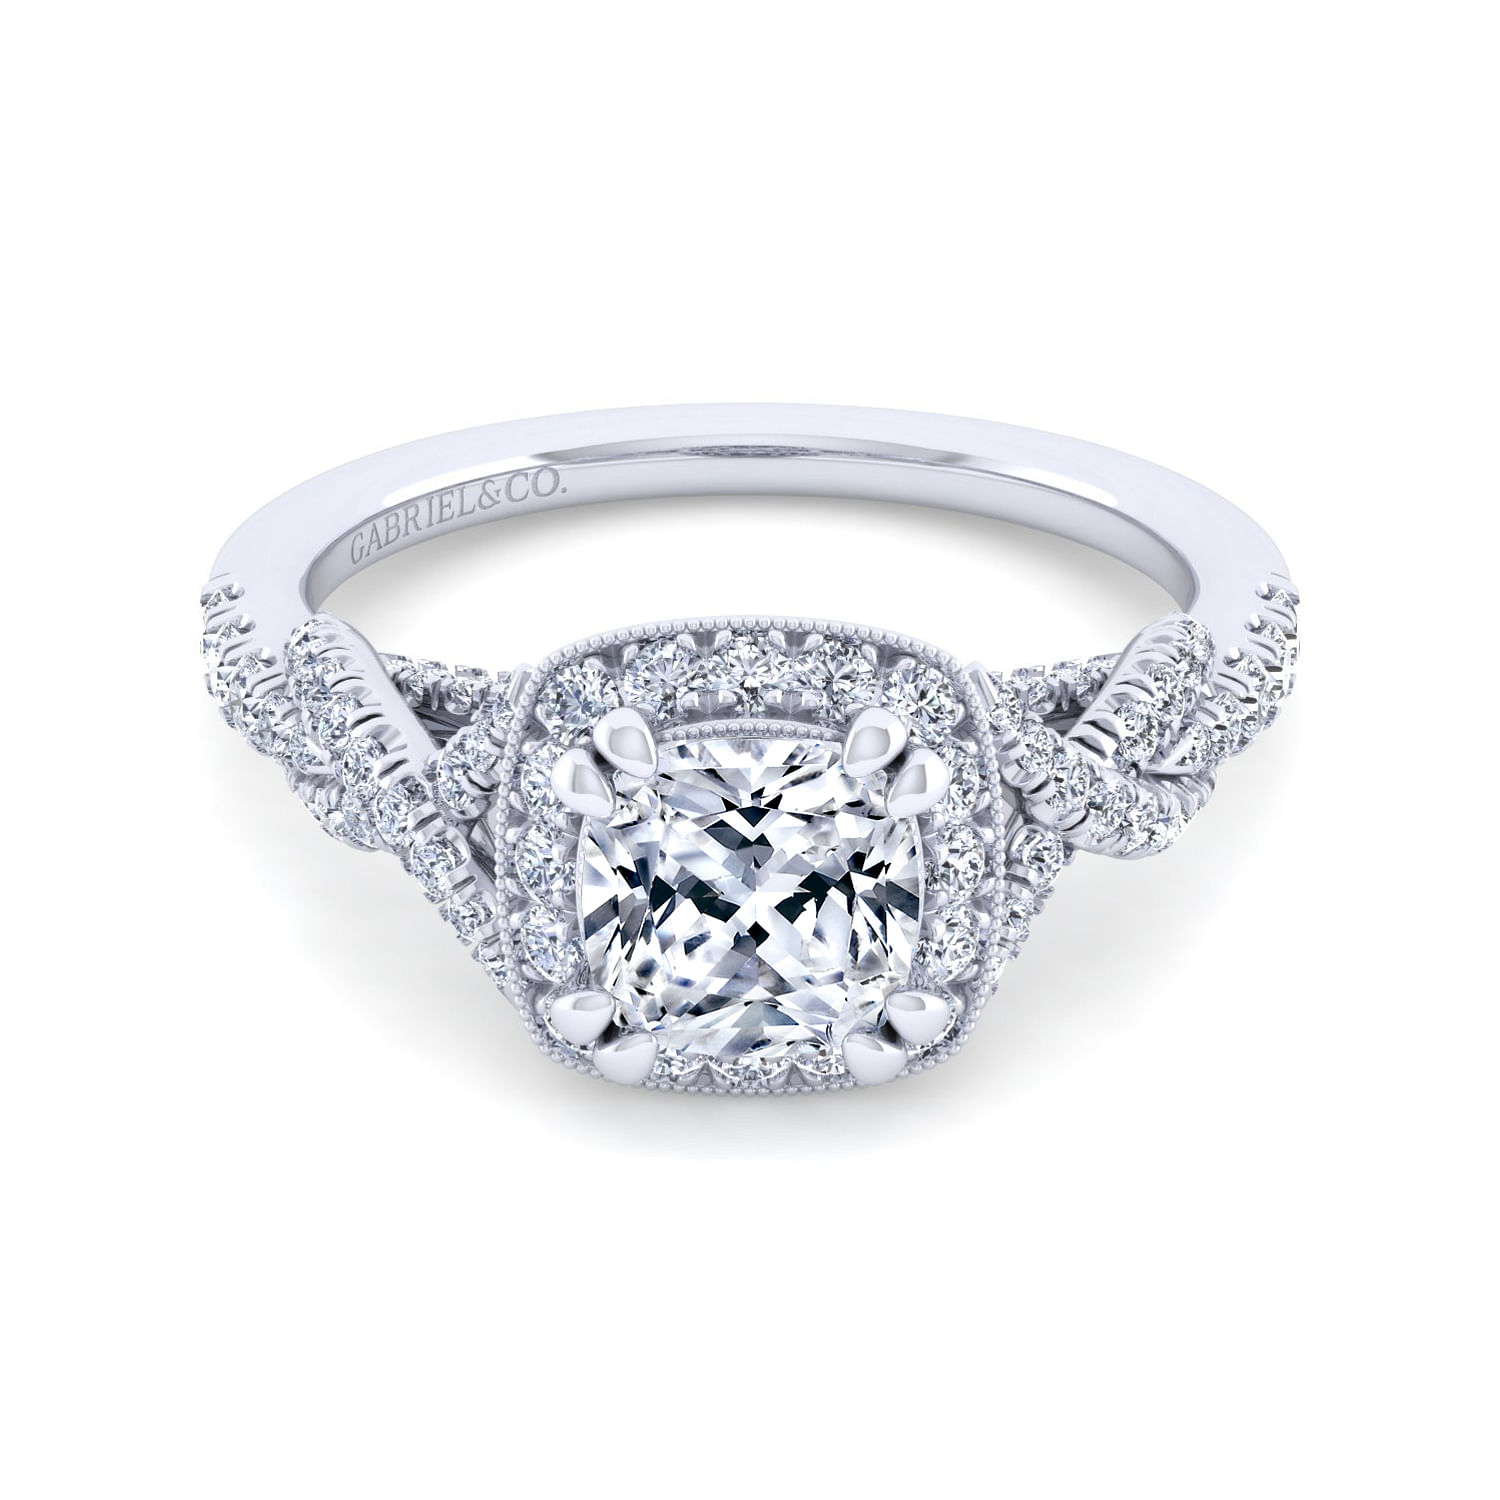 Wisteria - 14K White Gold Cushion Halo Diamond Engagement Ring